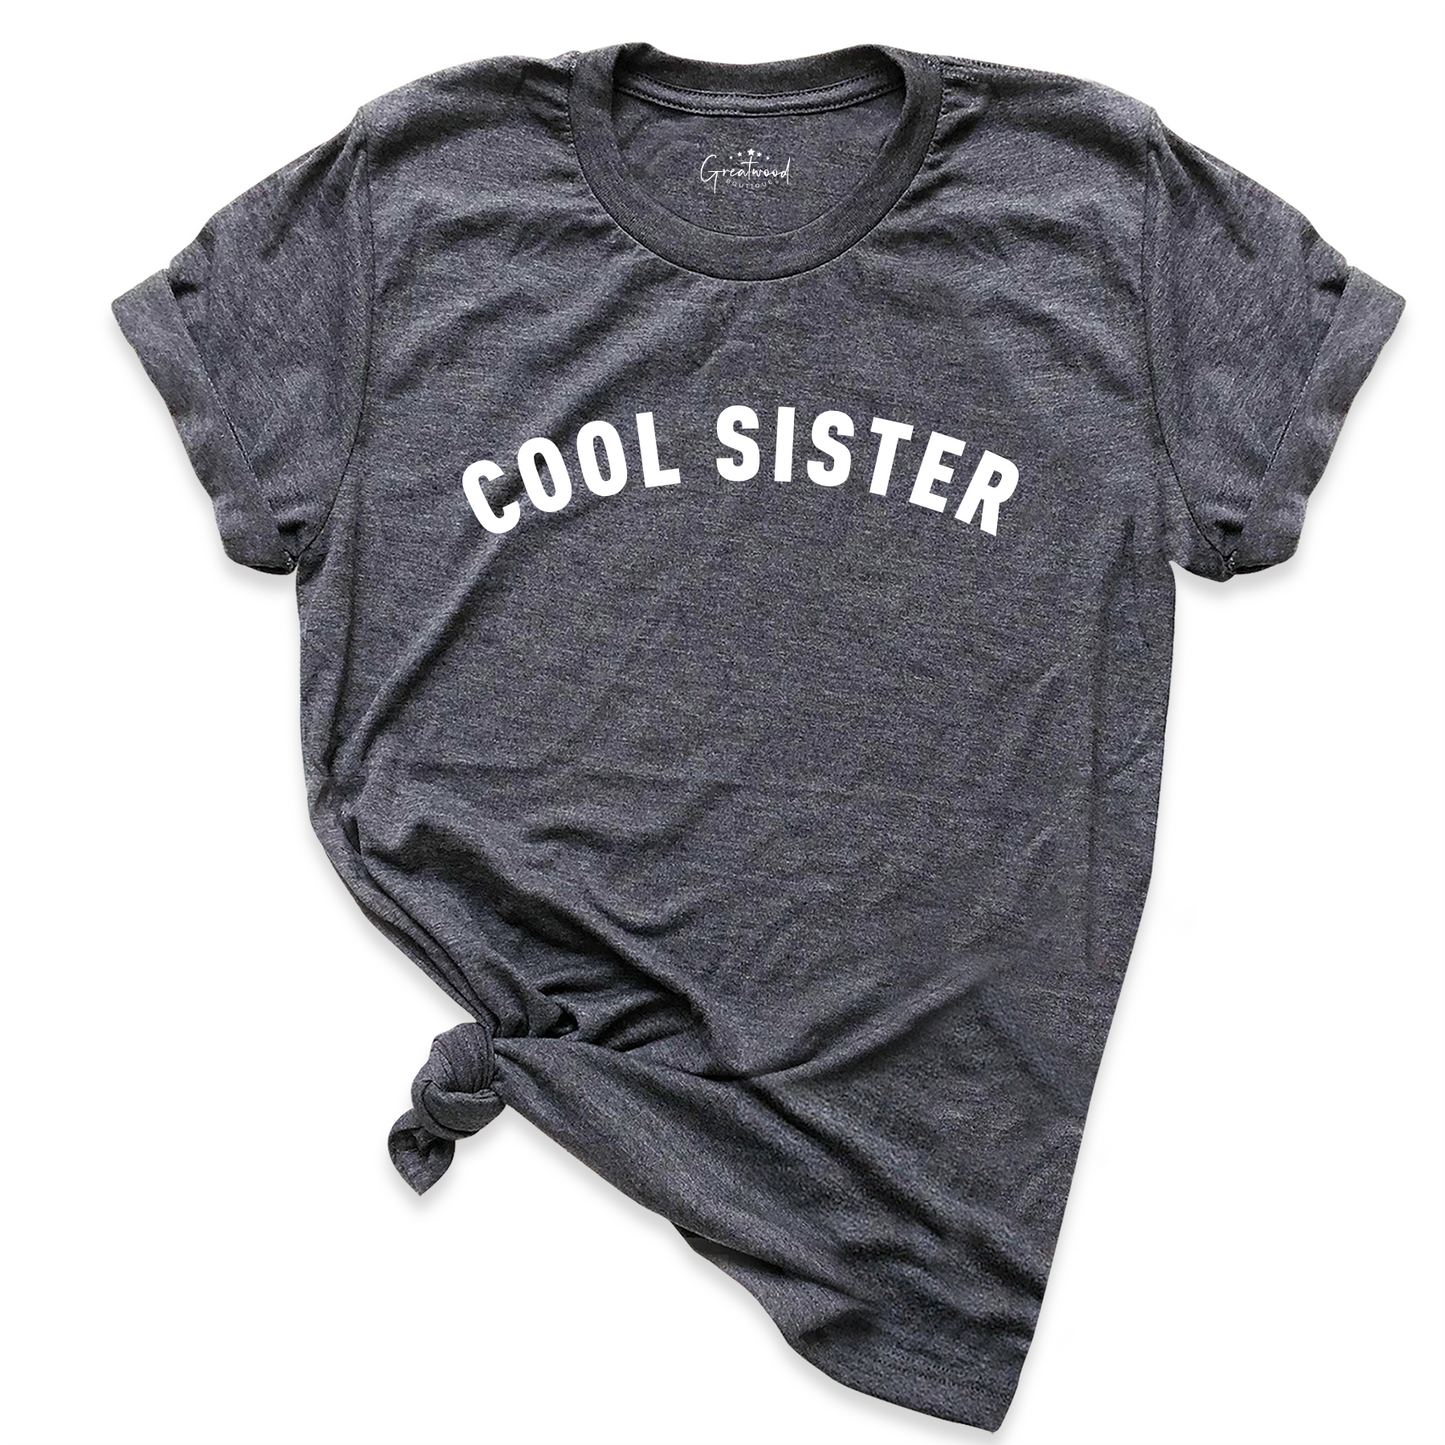 Cool Sister Shirt